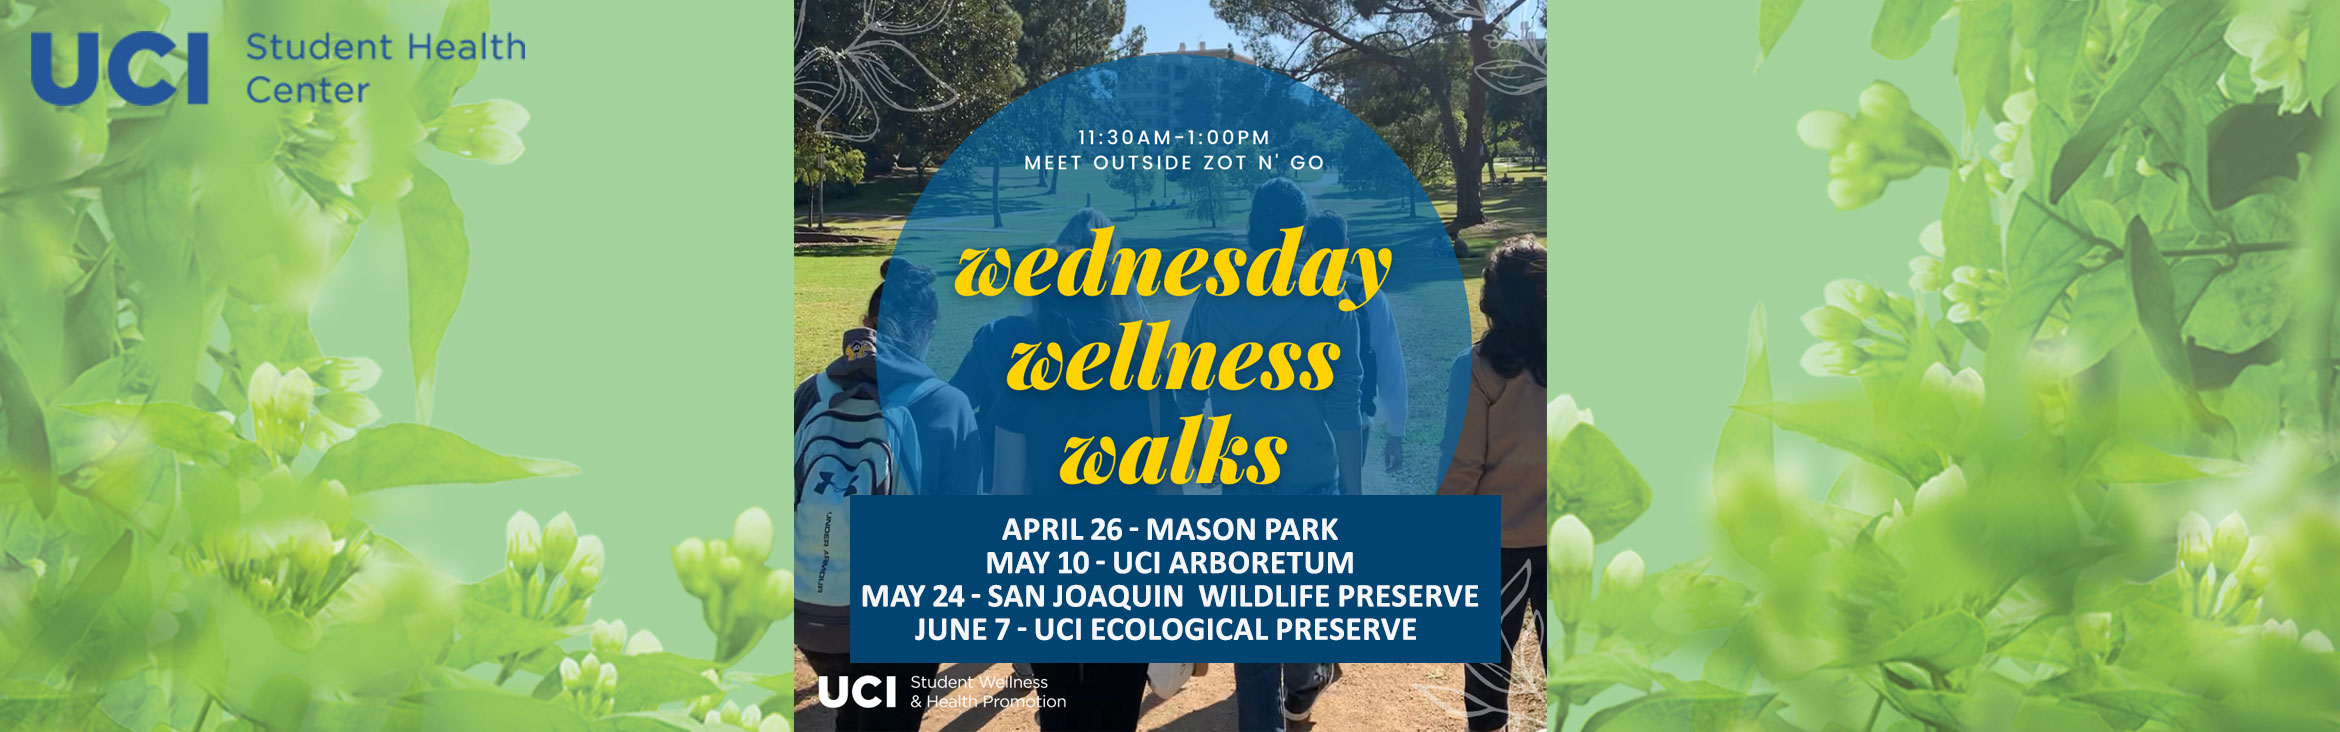 Join The Wednesday Wellness Walks 